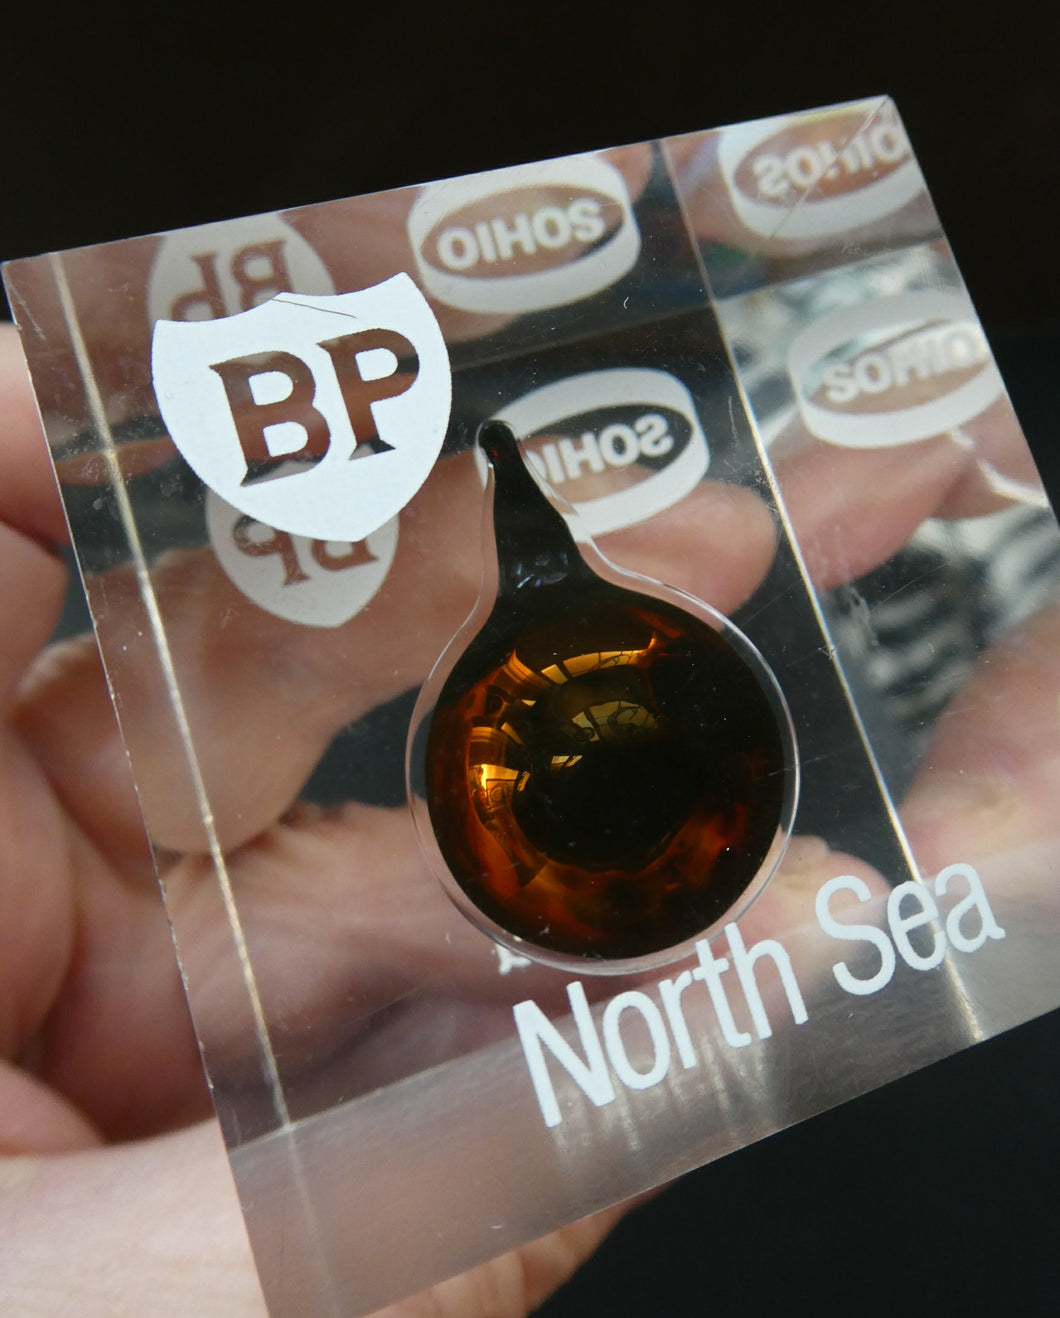 BP North Sea Oil Sohio Oil Alaska Paperweight Drop of OIl 1970s